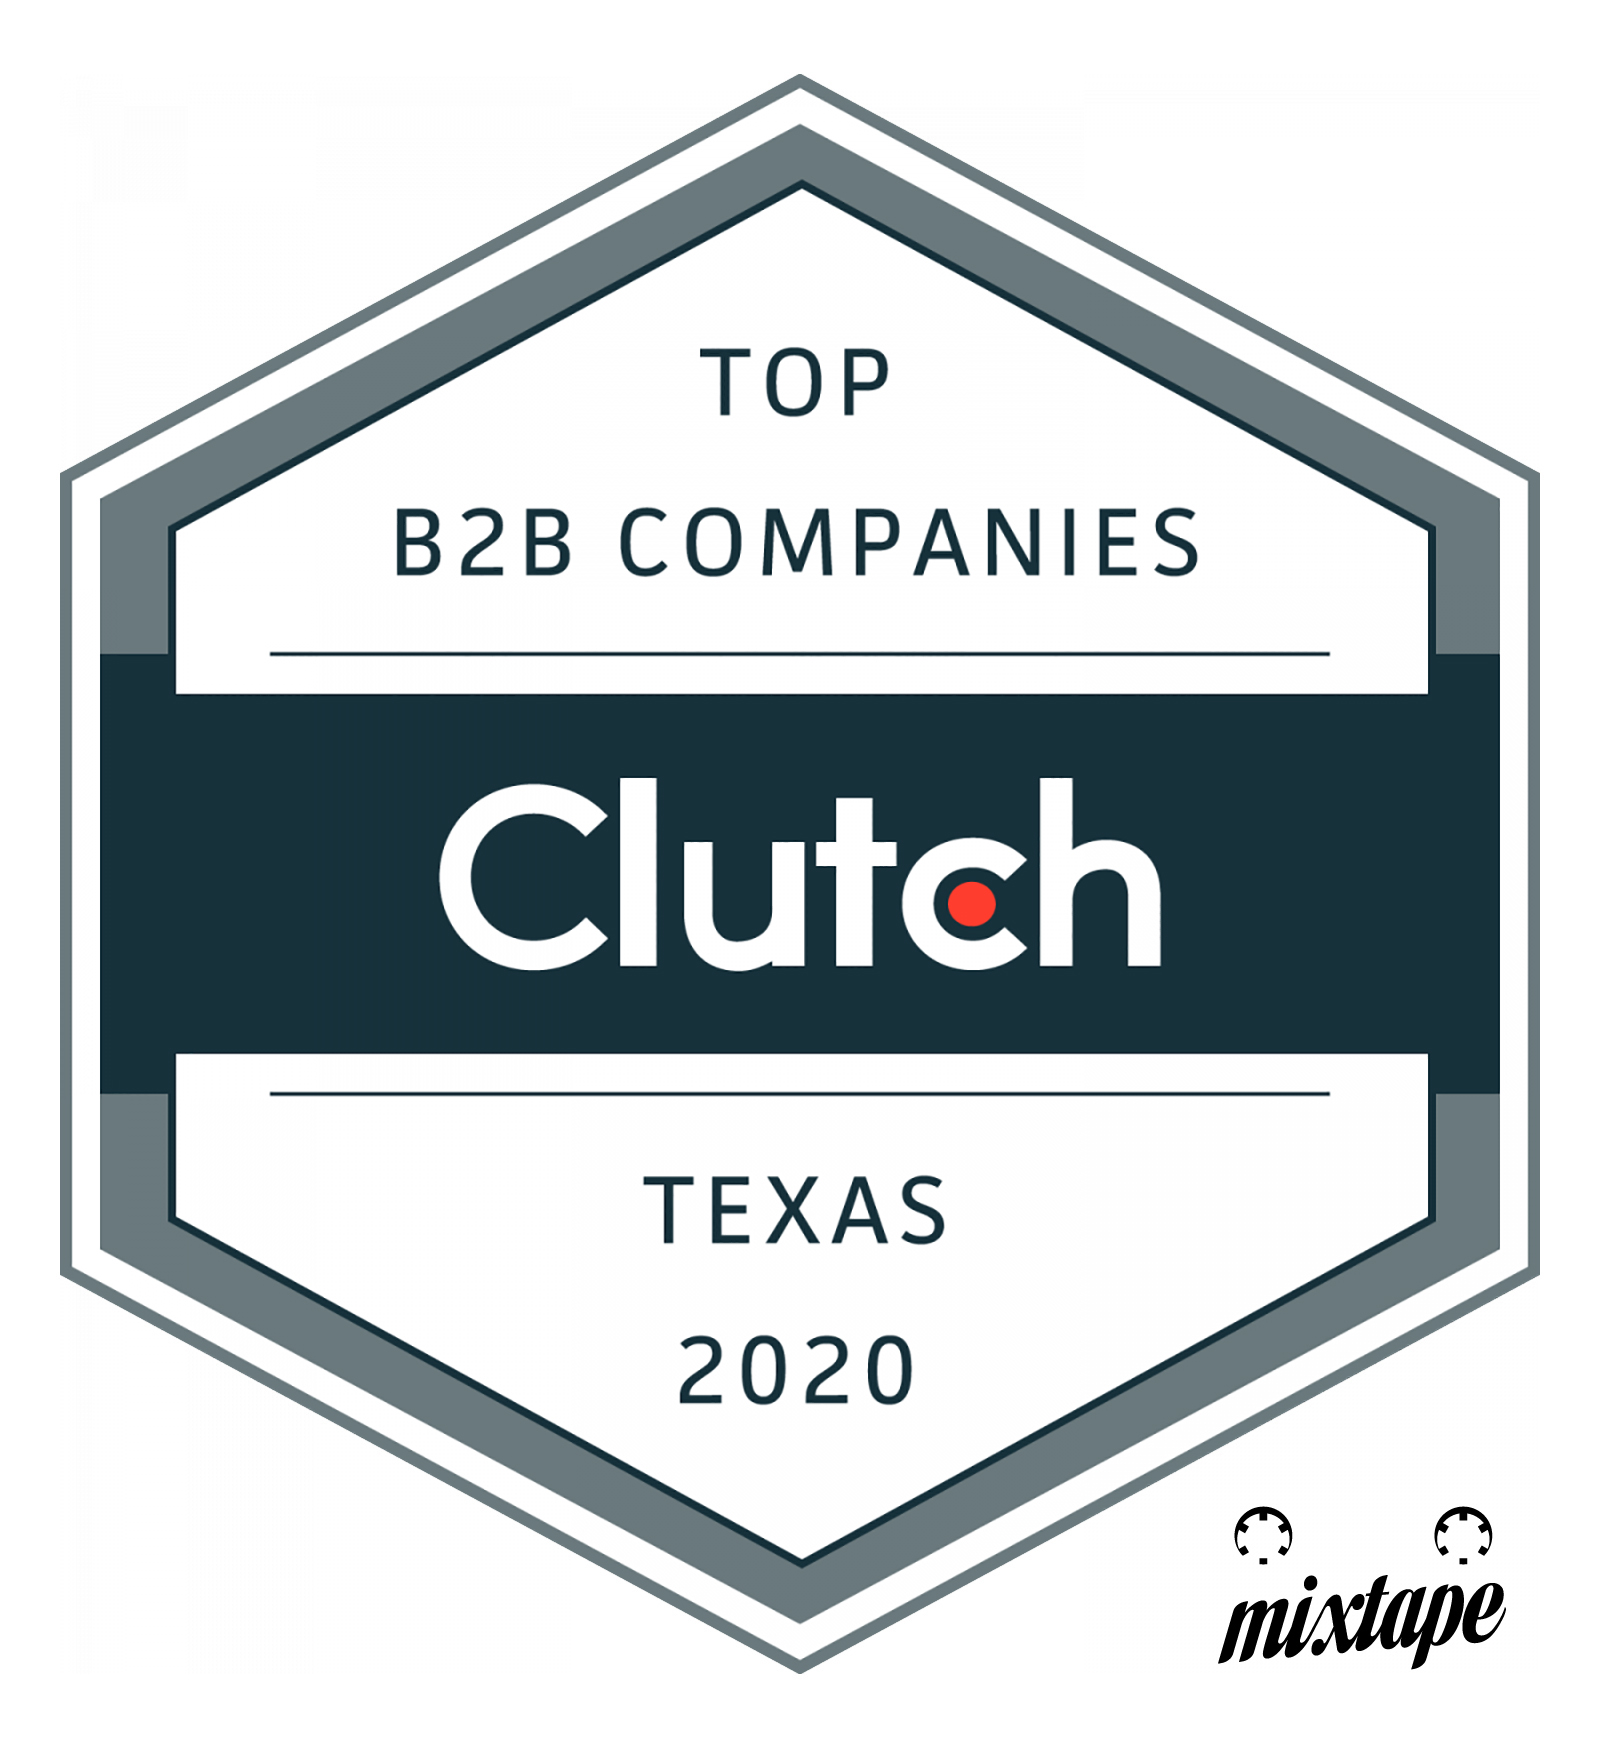 mixtape marketing is a Clutch 2020 Top Texas B2B Companies